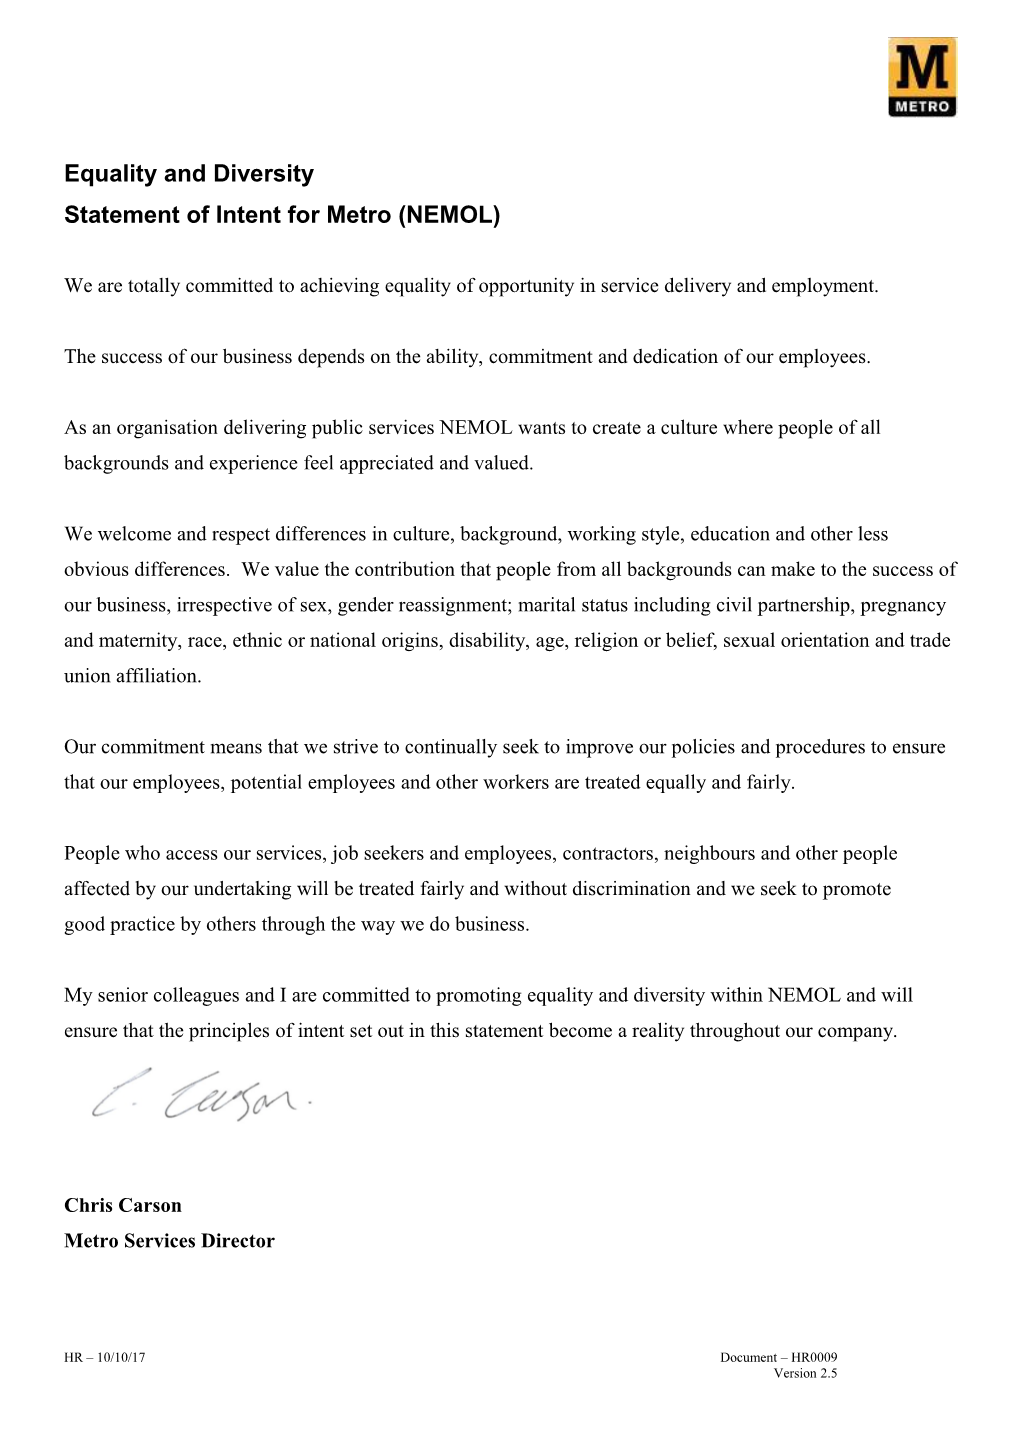 Statement of Intent for Metro (NEMOL)